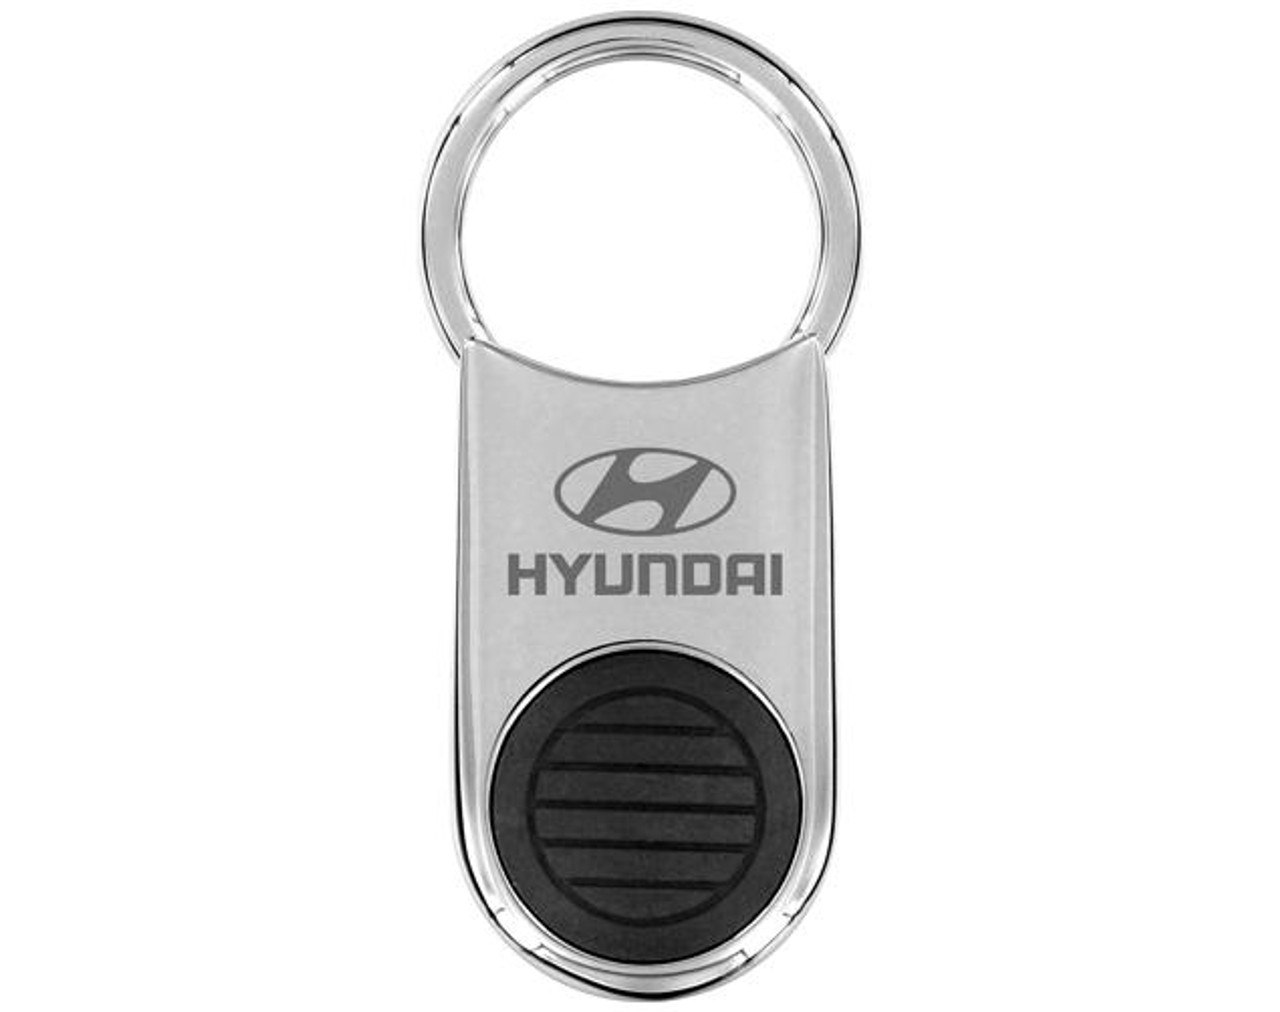 Hyundai Oval Shape Keychain With A Blue Light